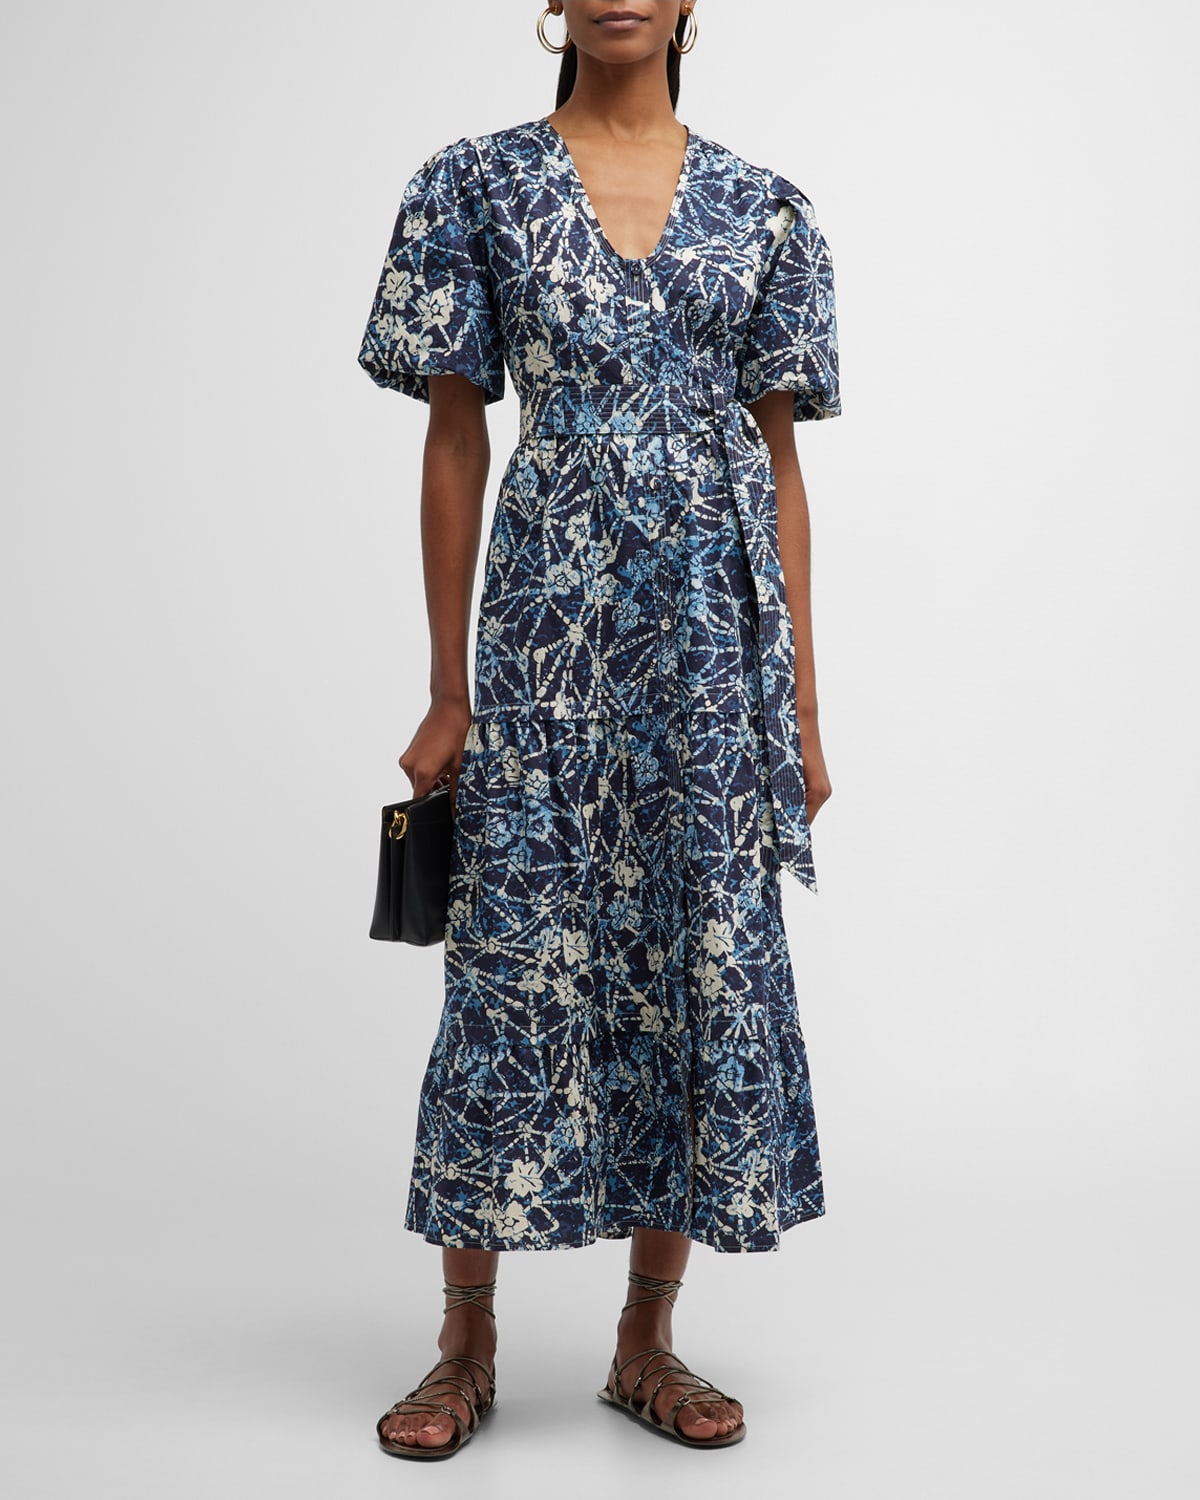 Marie Oliver Natalie Abstract-Print Blouson-Sleeve Dress